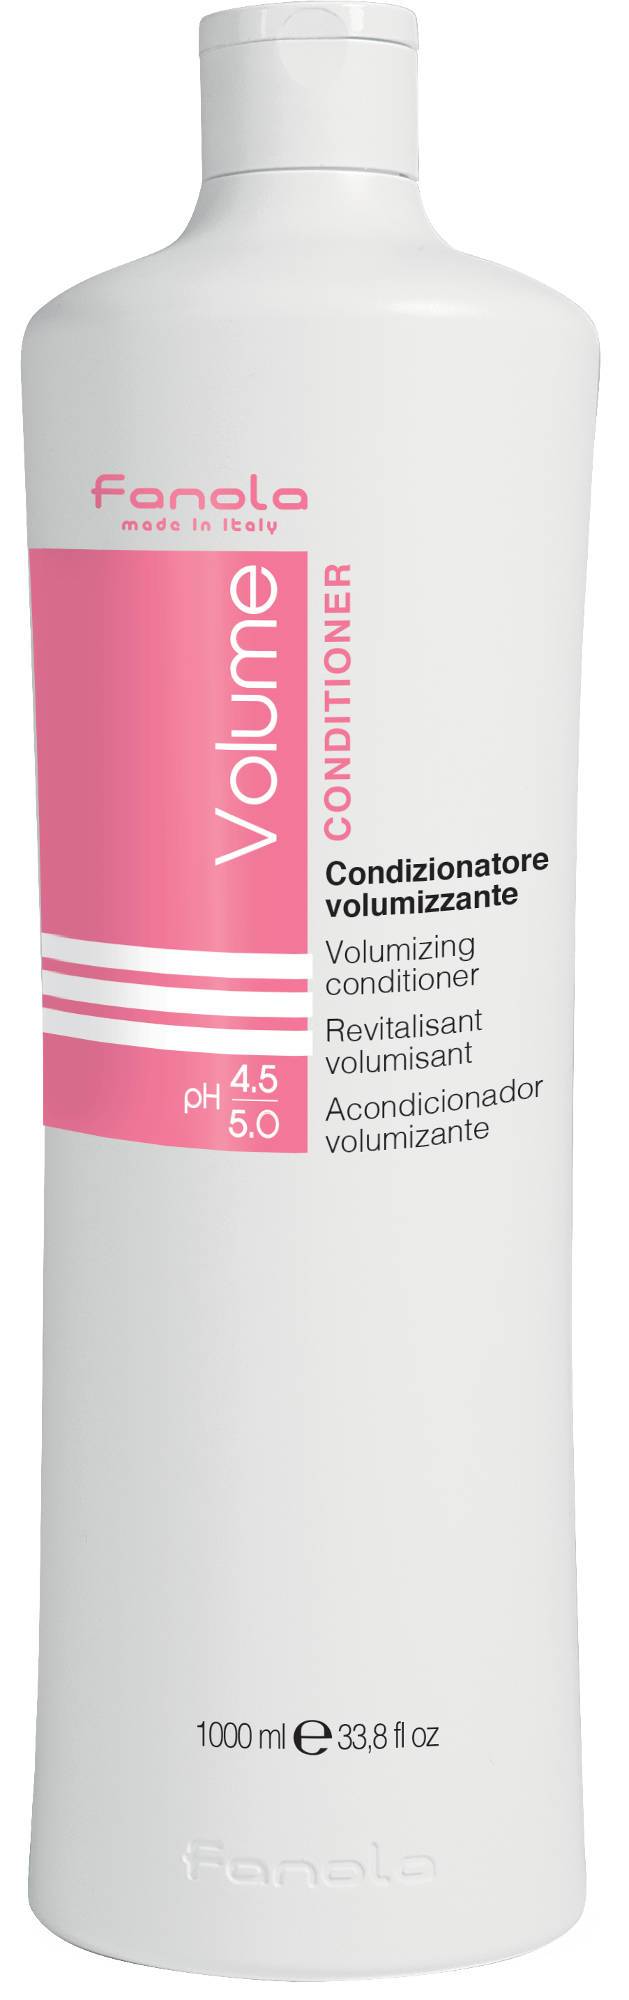 Fanola Volumizing Conditioner, Hair Conditioners Fanola 1000 ml 